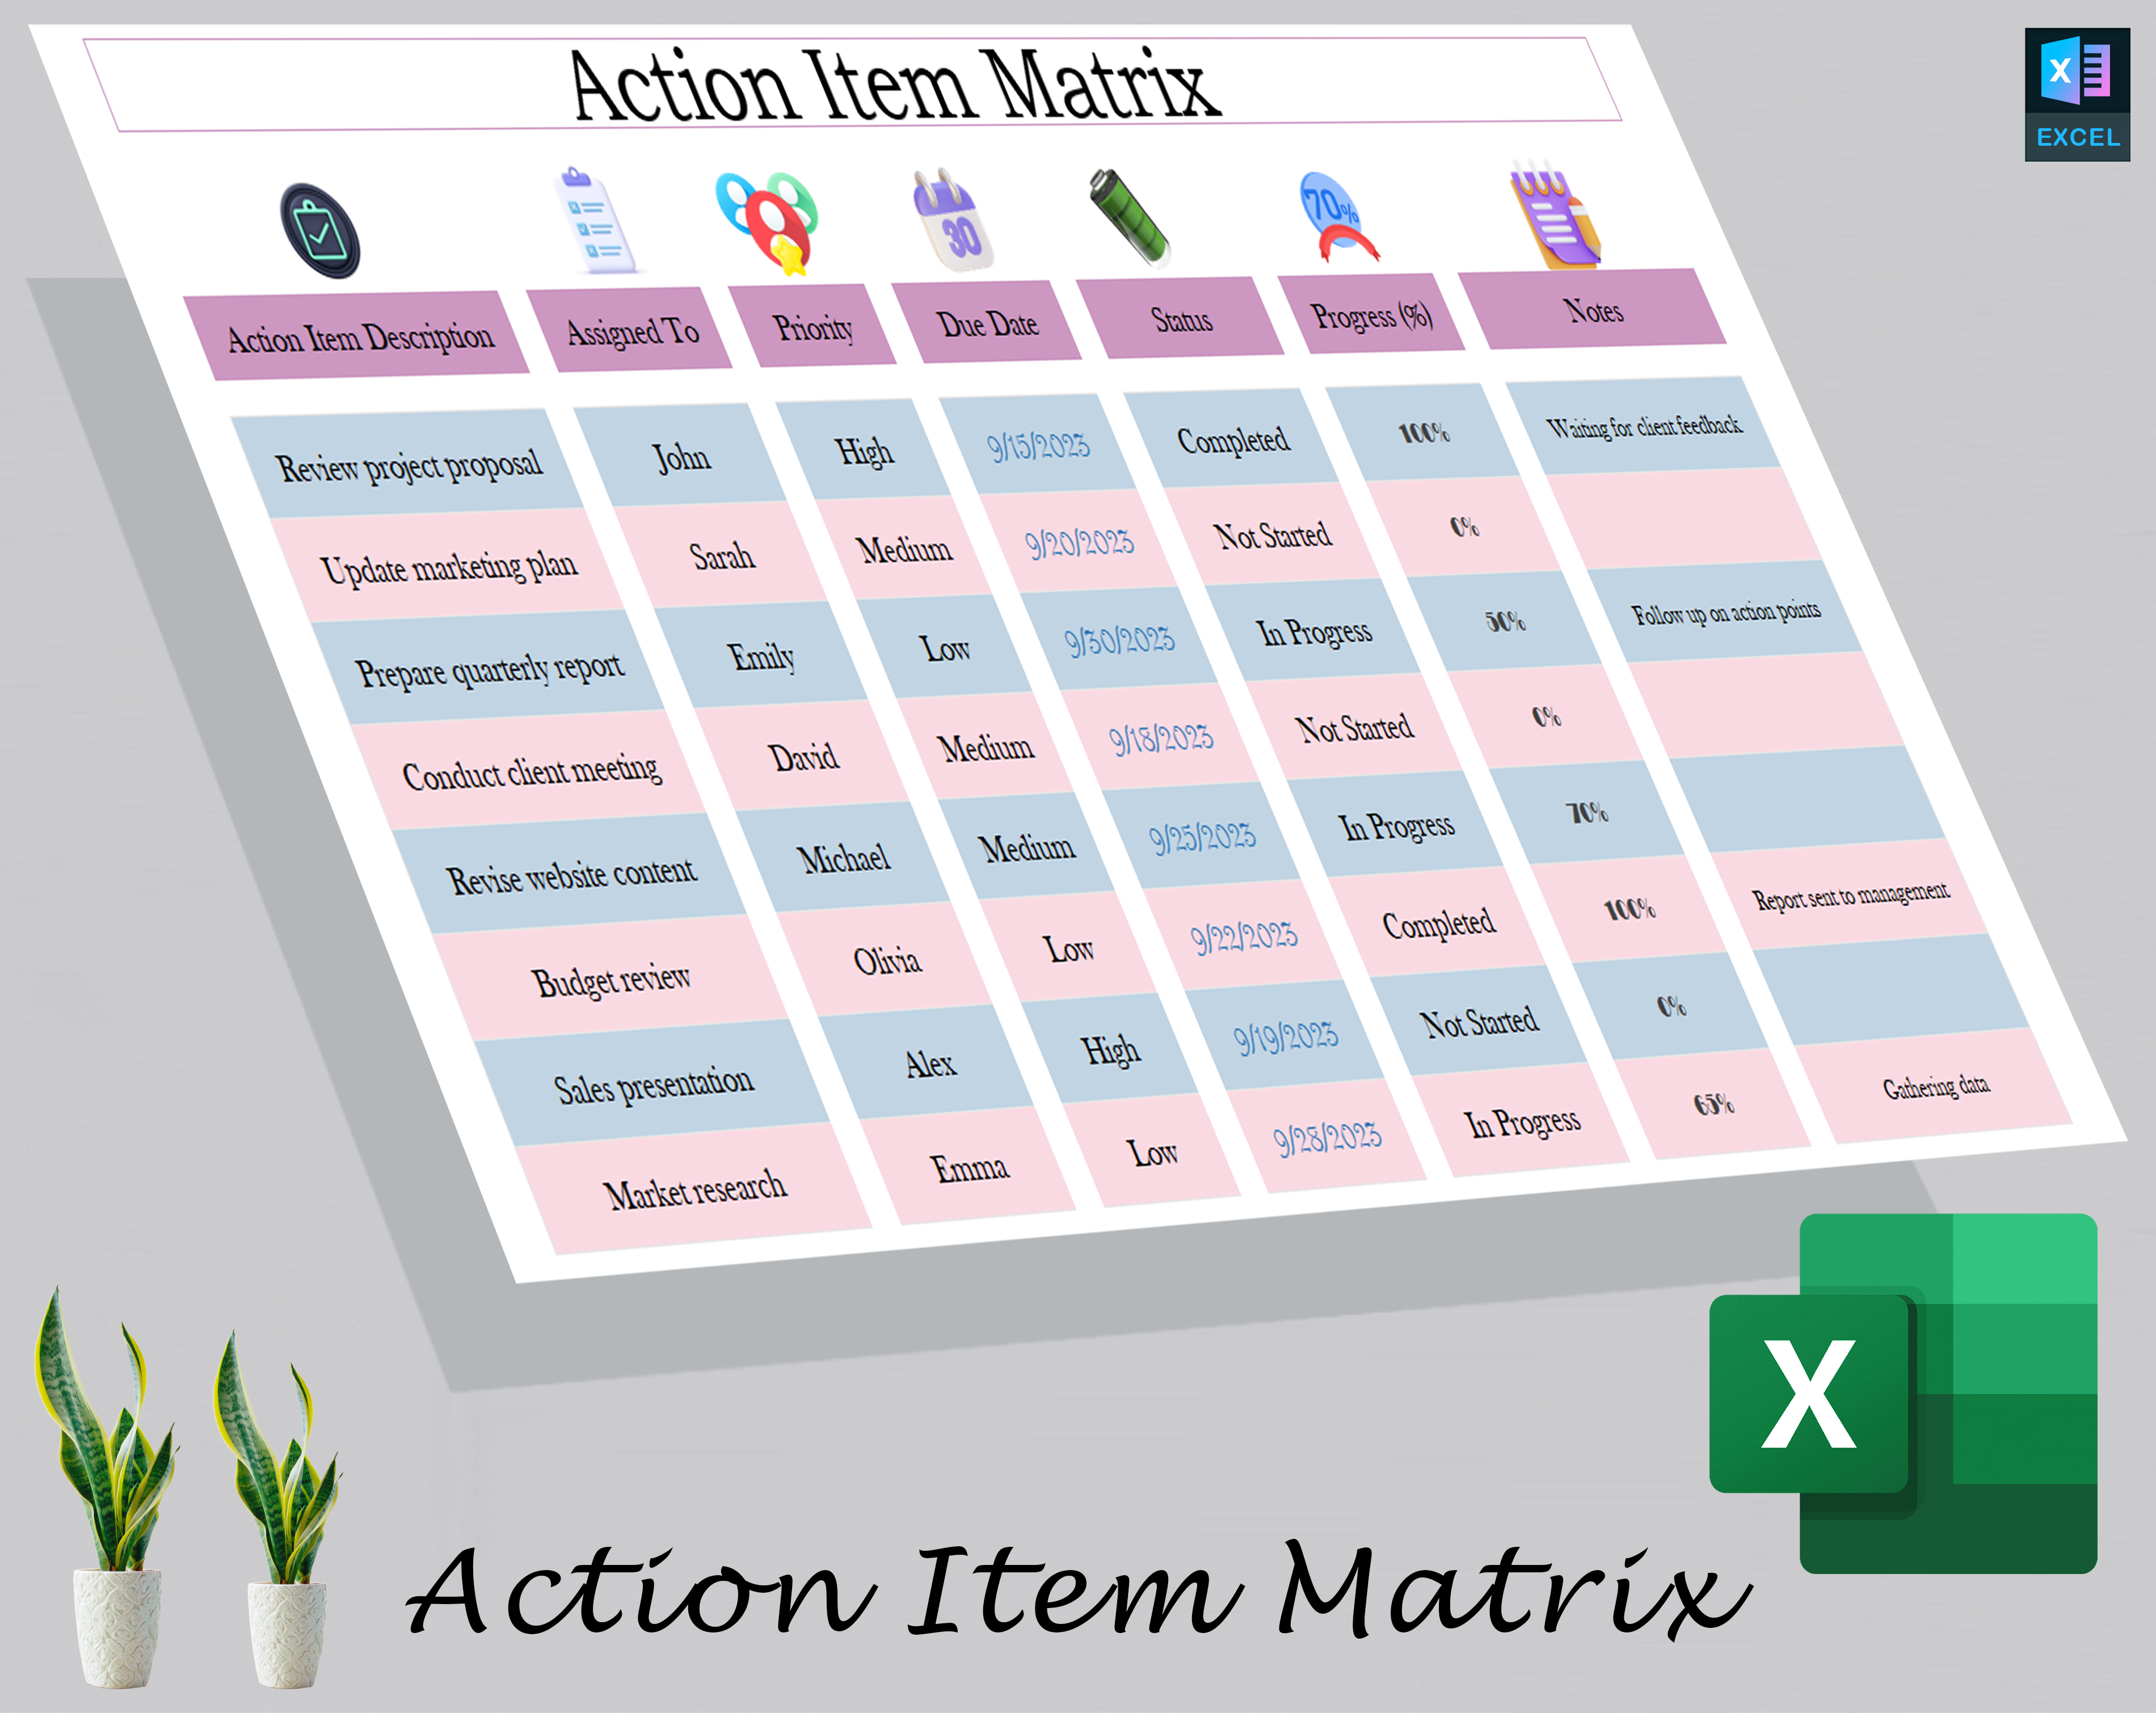 Action Item Matrix